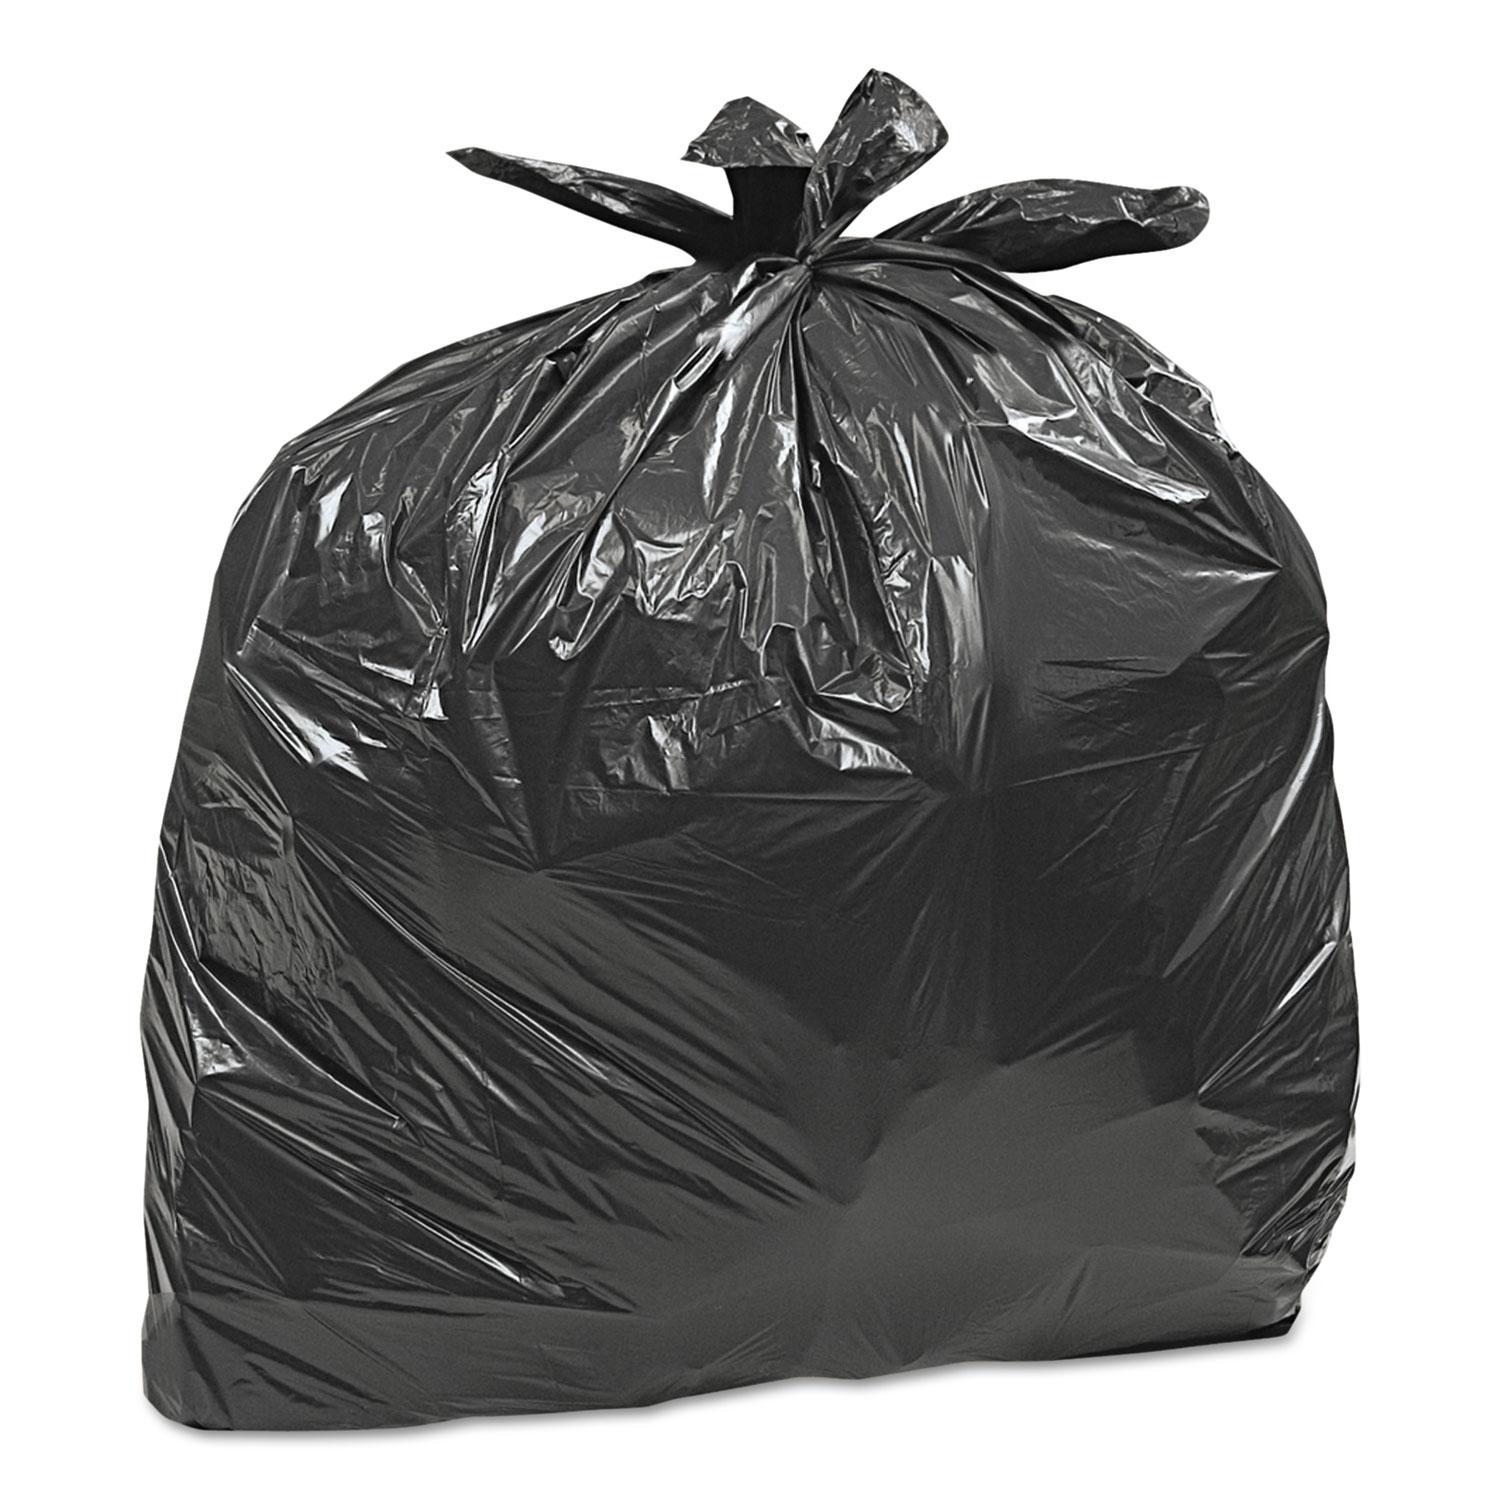  Earthsense WEB GES6TL50 Large Trash Bags, 33 gal, 0.75 mil, 32.5 x 40, Black, 50/Box (WBIGES6FTL50CT) 